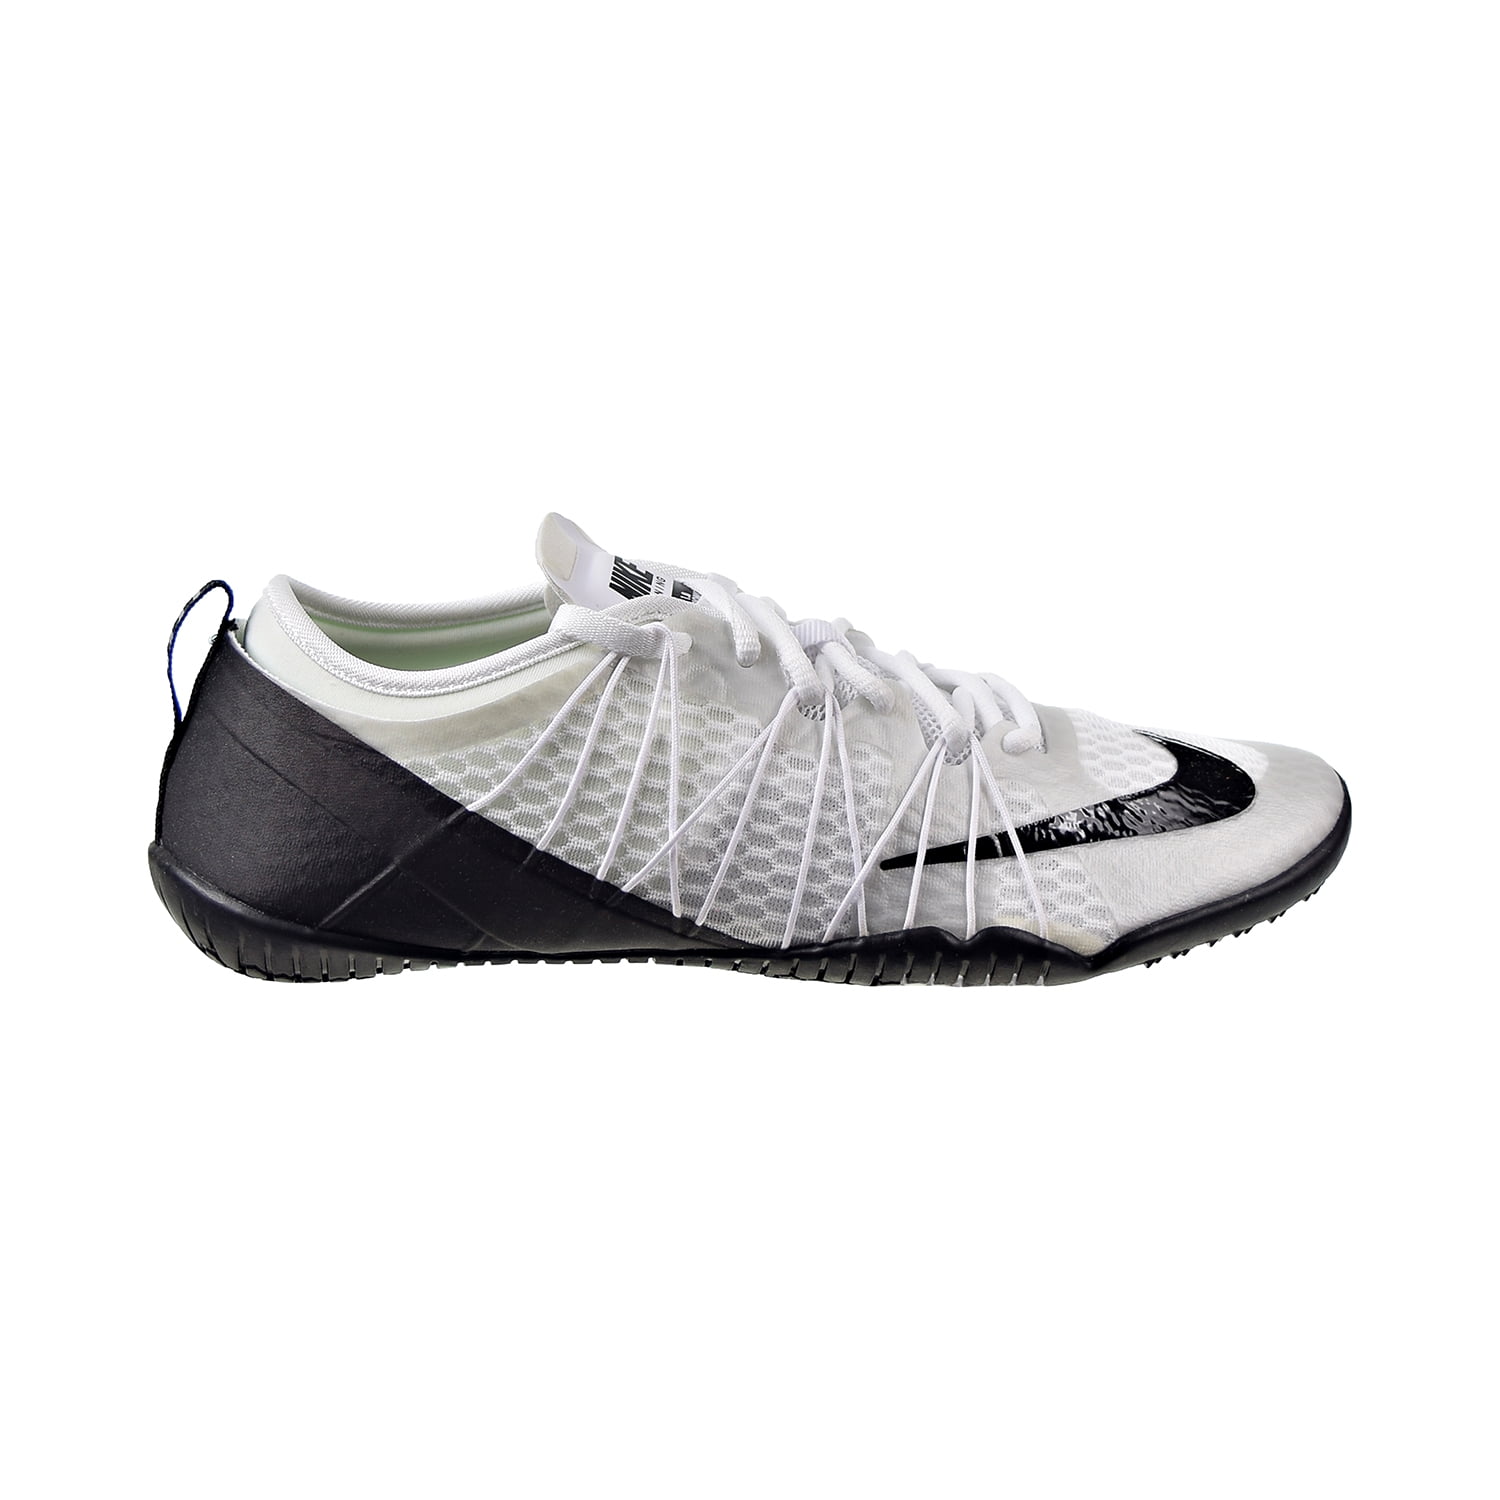 Nike Women's Free 1.0 Cross Running Shoes White-Black 718841-100 - Walmart.com